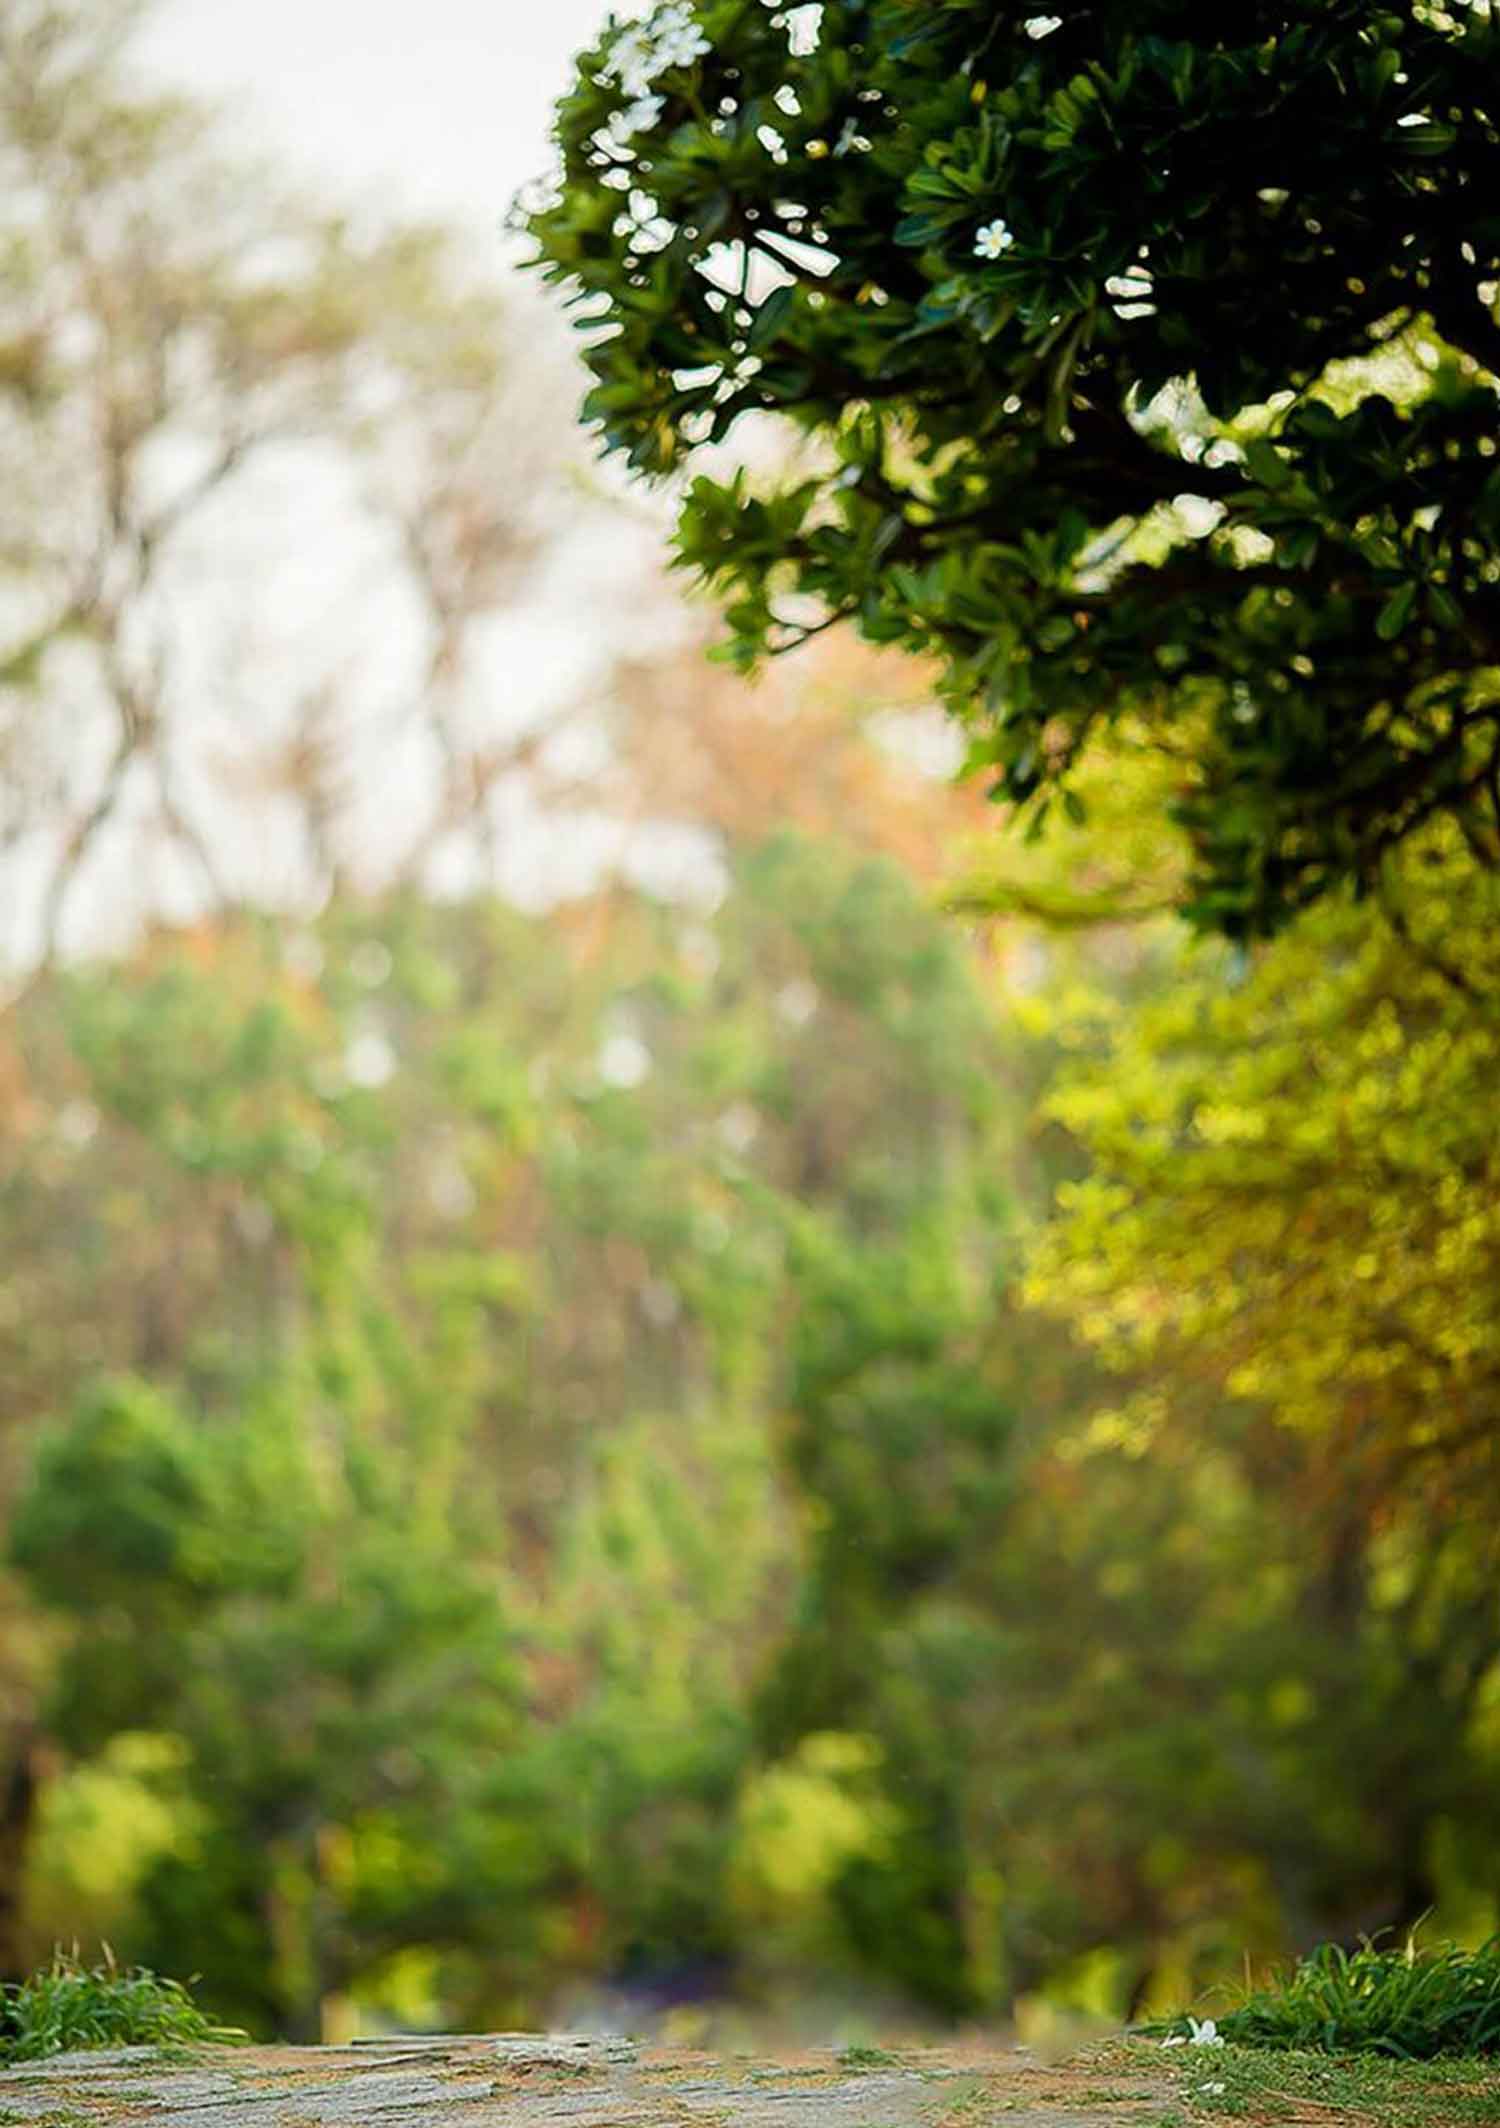 Yellow tone blur nature background free stock photo download